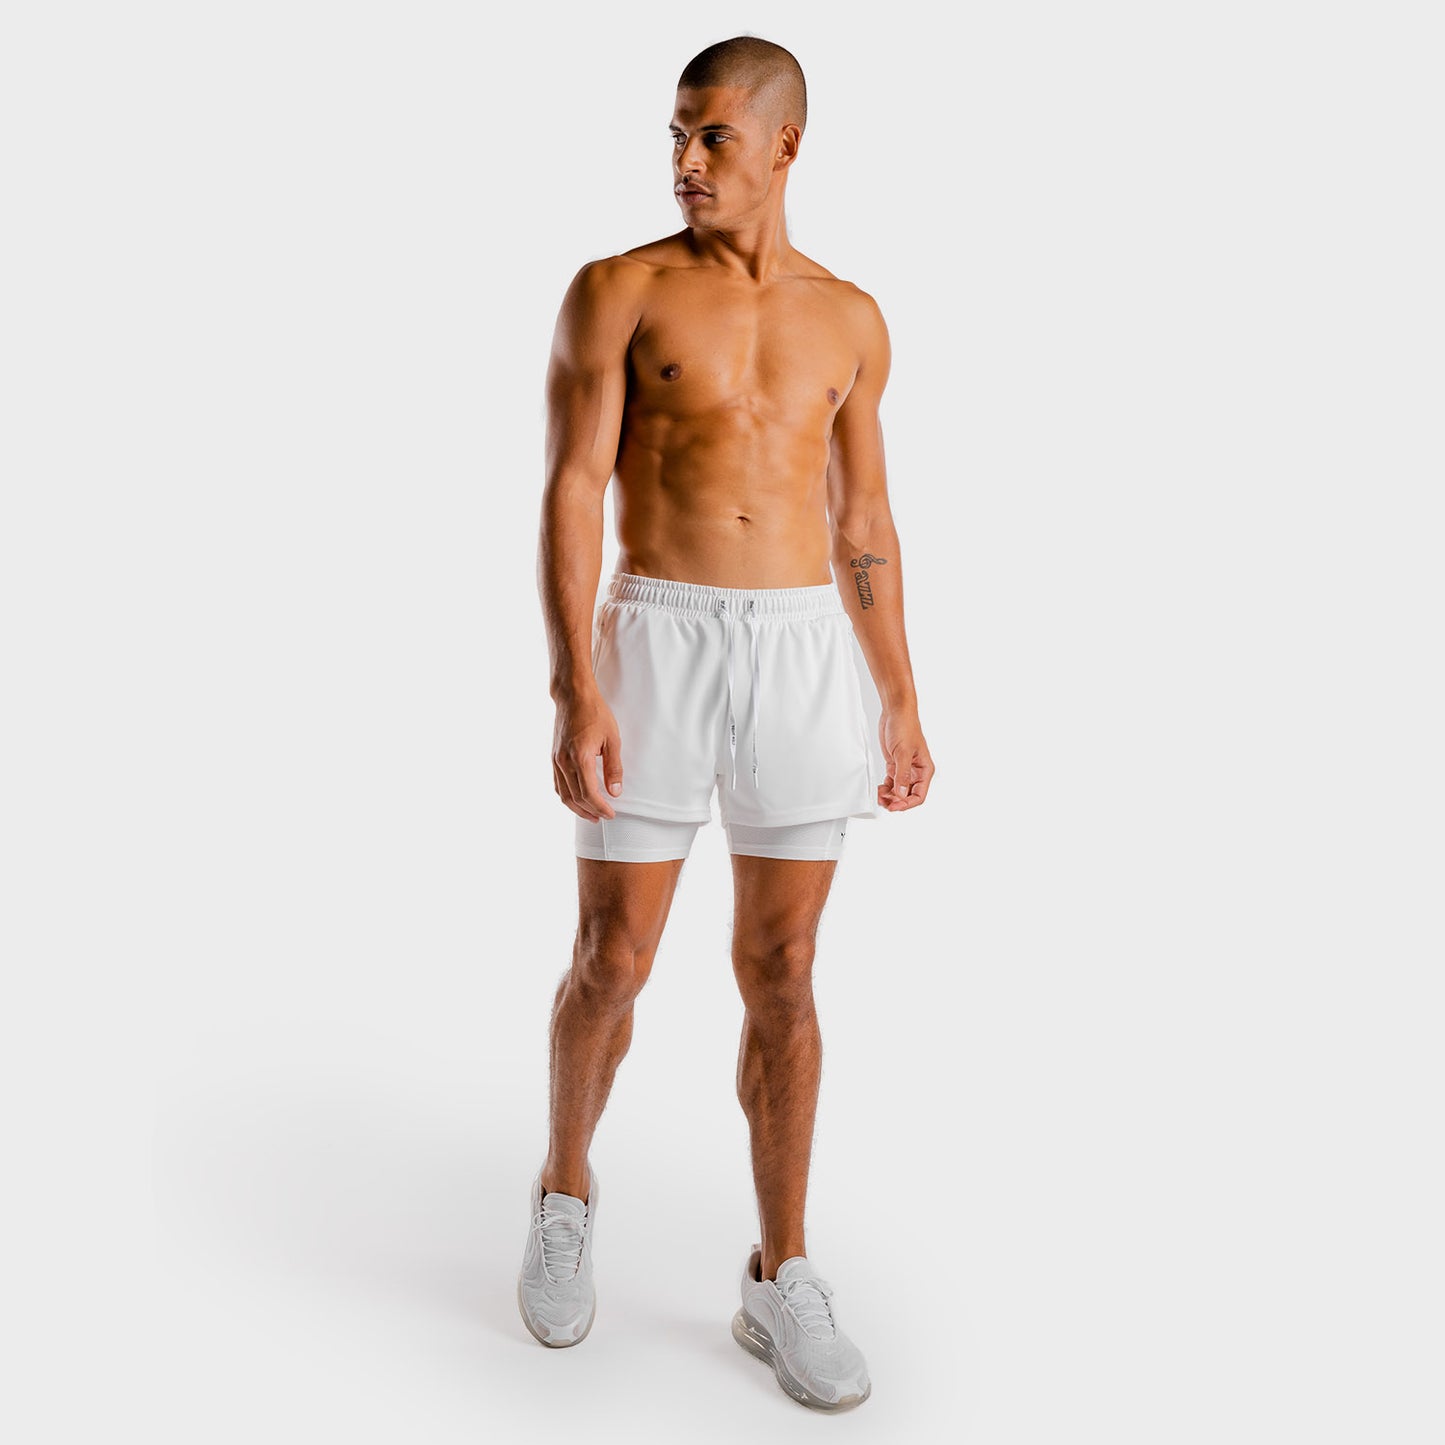 squatwolf-workout-short-for-men-hybrid-2-in-1-shorts-white-gym-wear